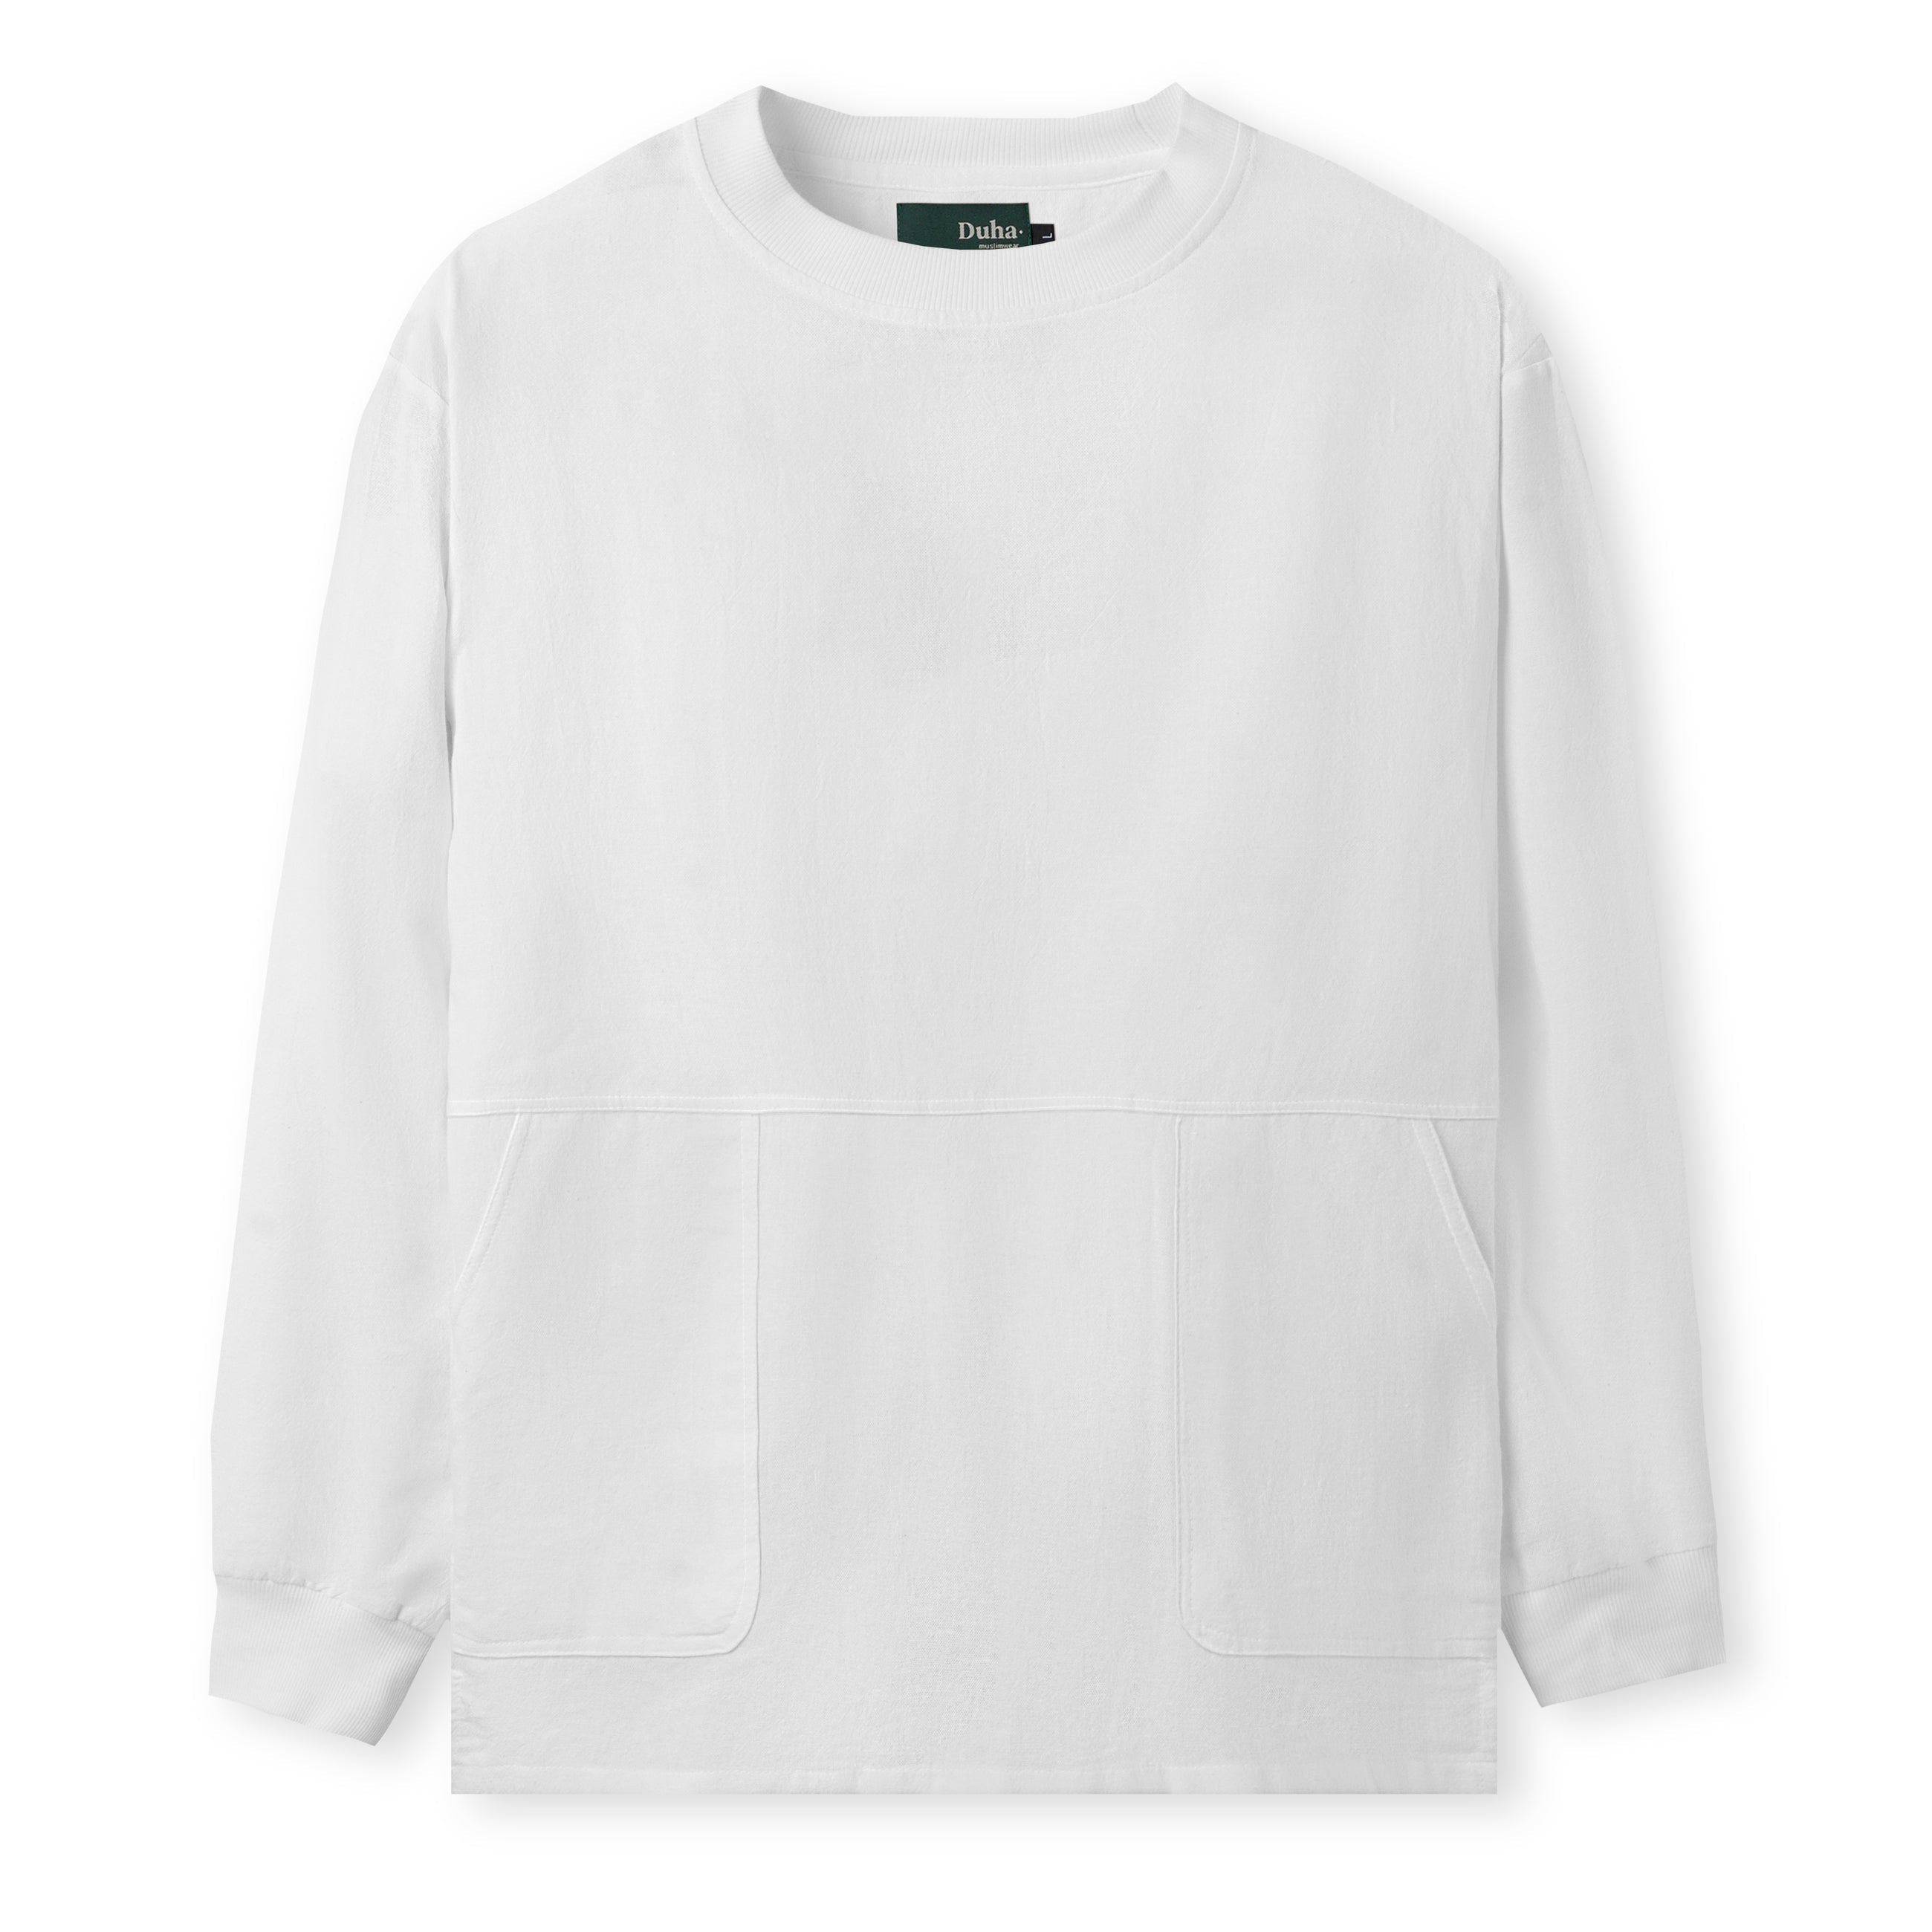 Baha Long Sleeve T-Shirt - White